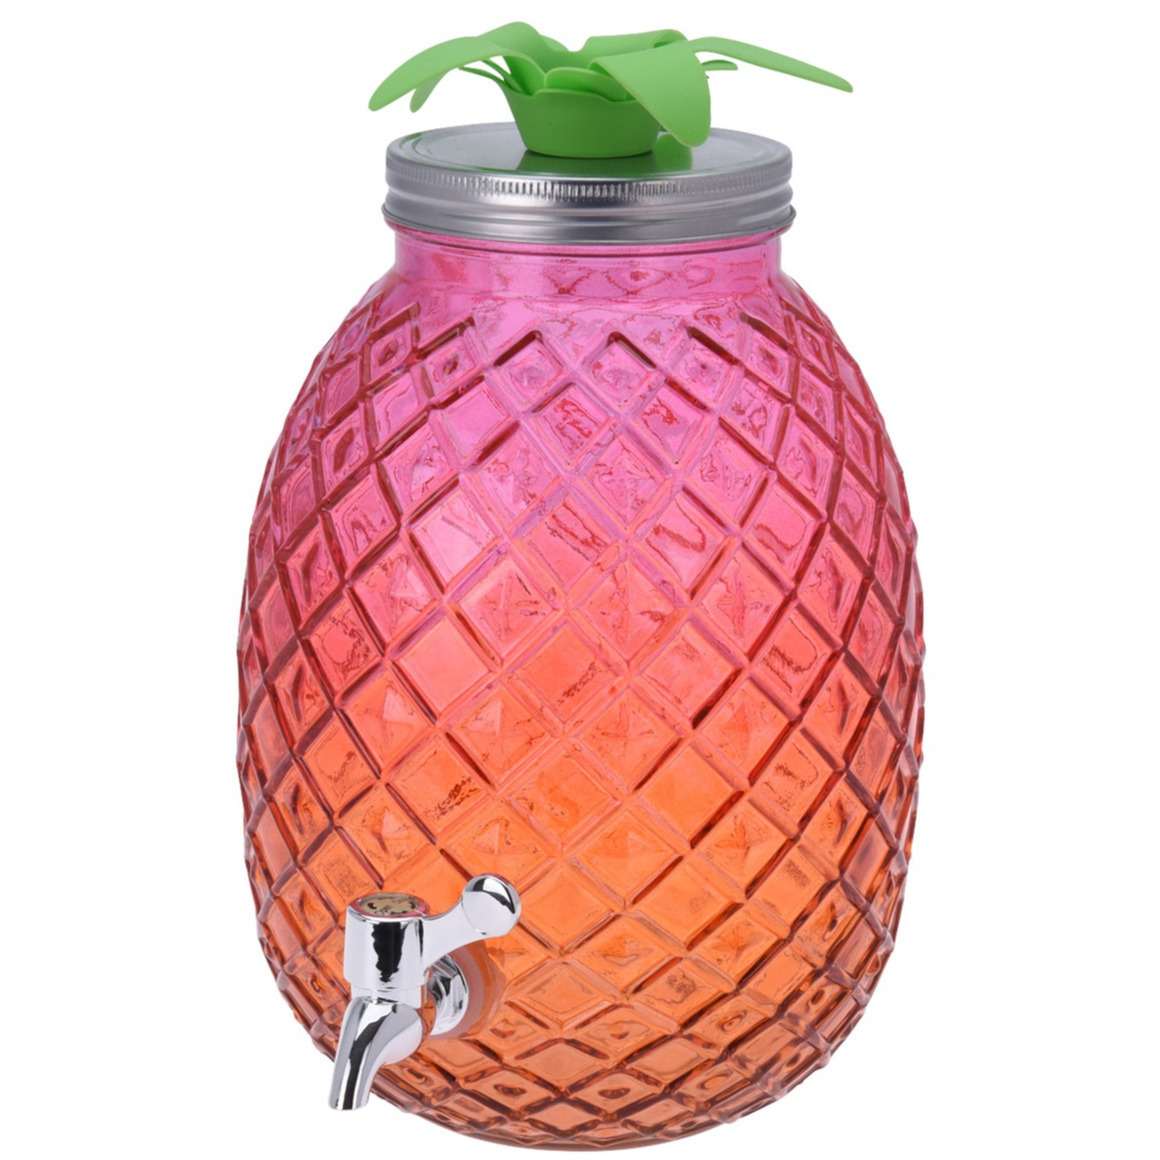 Glazen water-limonade-drank dispenser ananas roze-oranje 4,7 liter